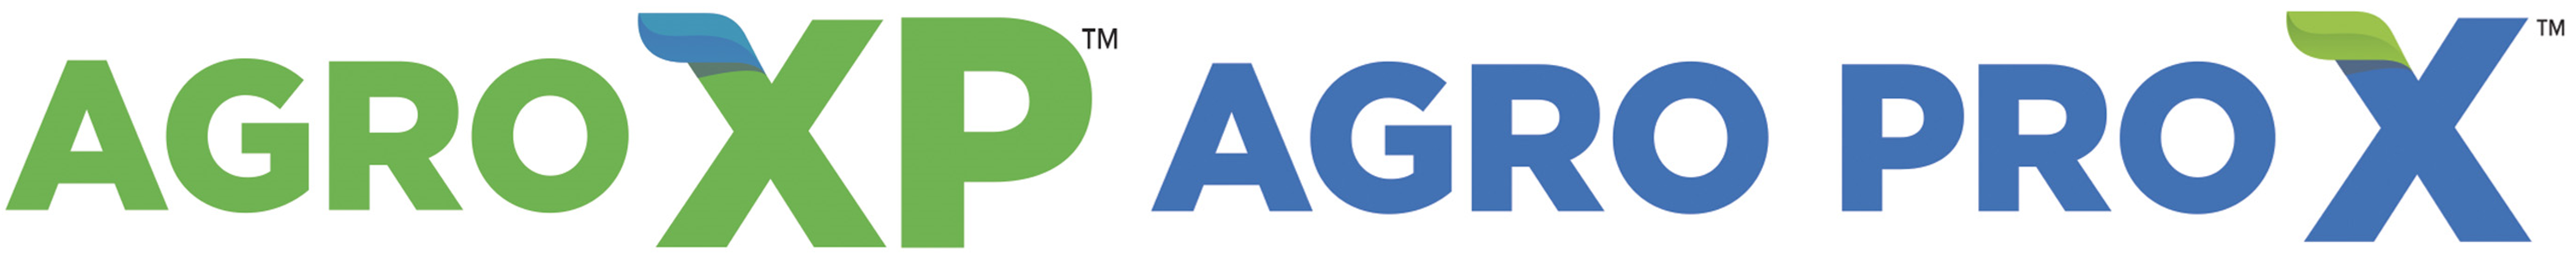 AgroXP-AgroProX logo